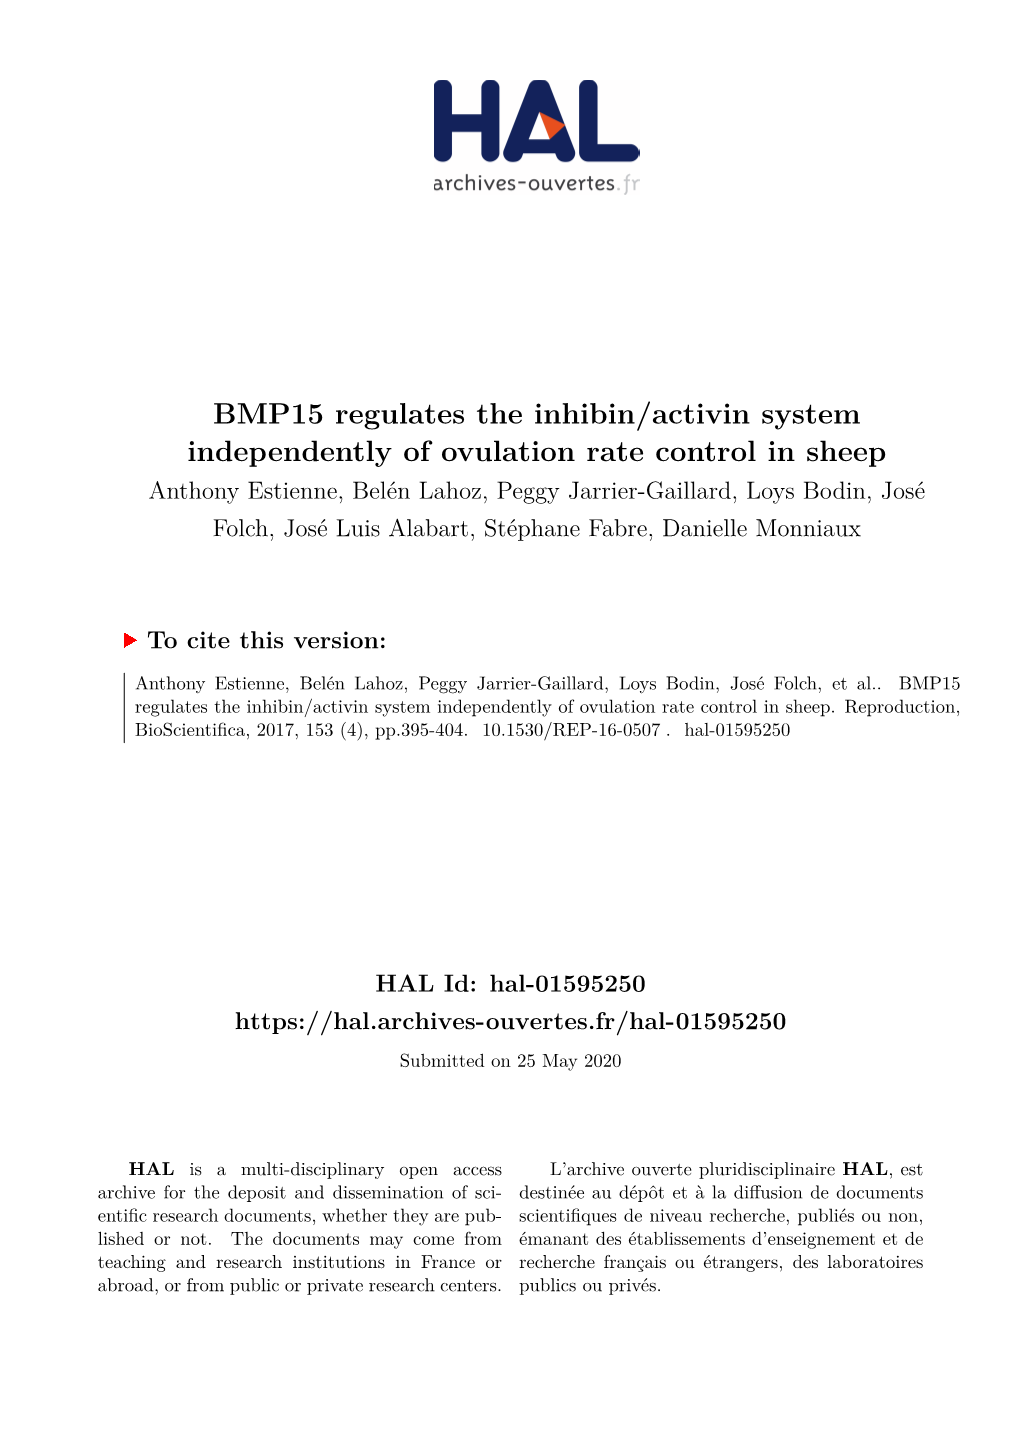 BMP15 Regulates the Inhibin/Activin System